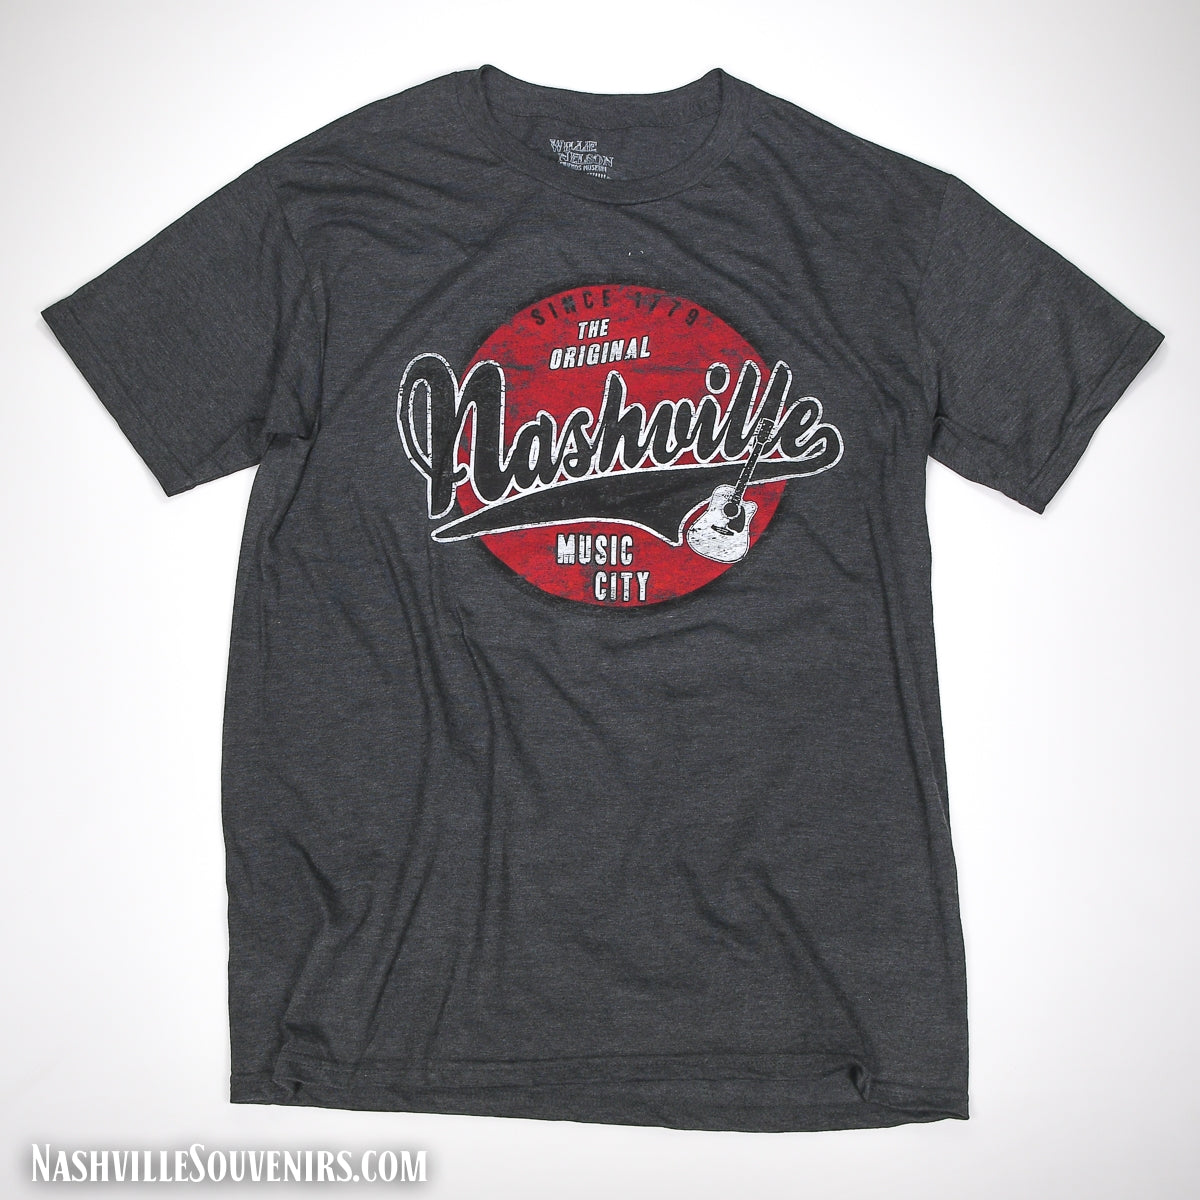 Original Nashville Music City T-shirt Since 1779